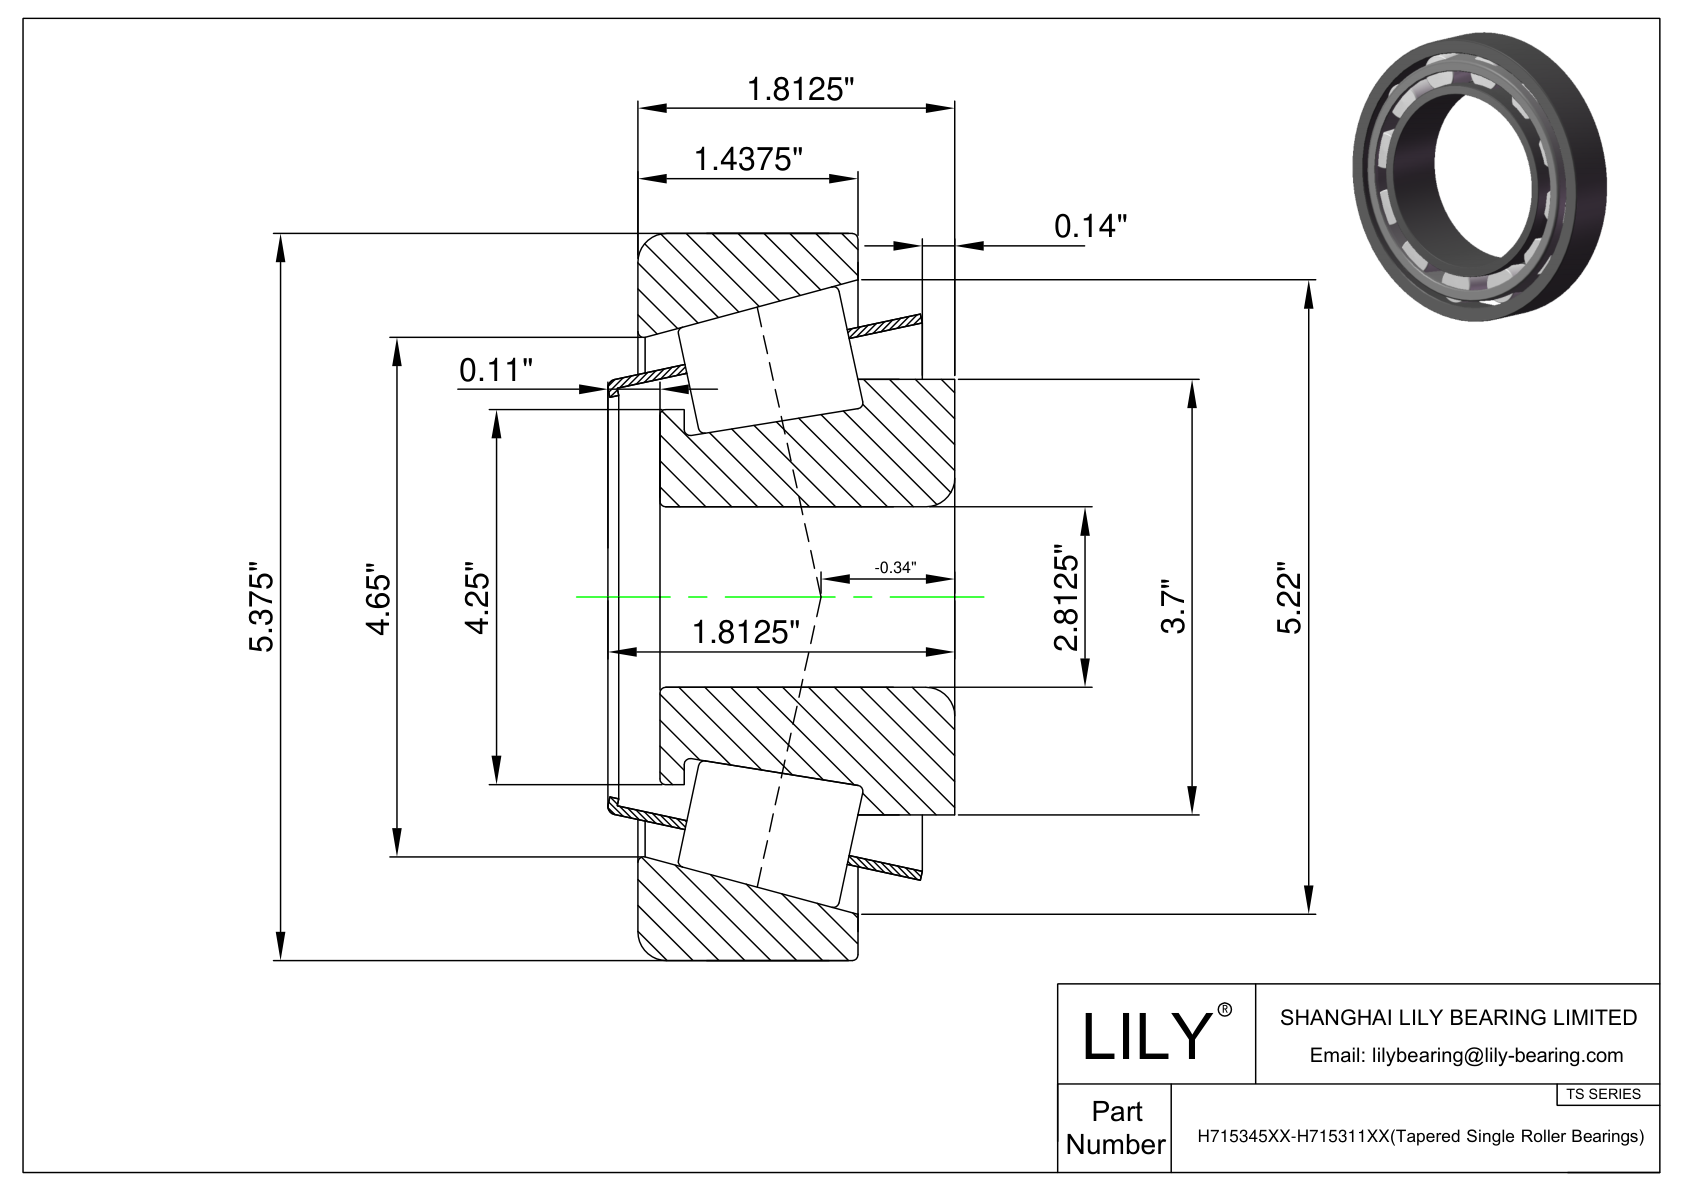 H715345XX-H715311XX TS系列(圆锥单滚子轴承)(英制) CAD图形